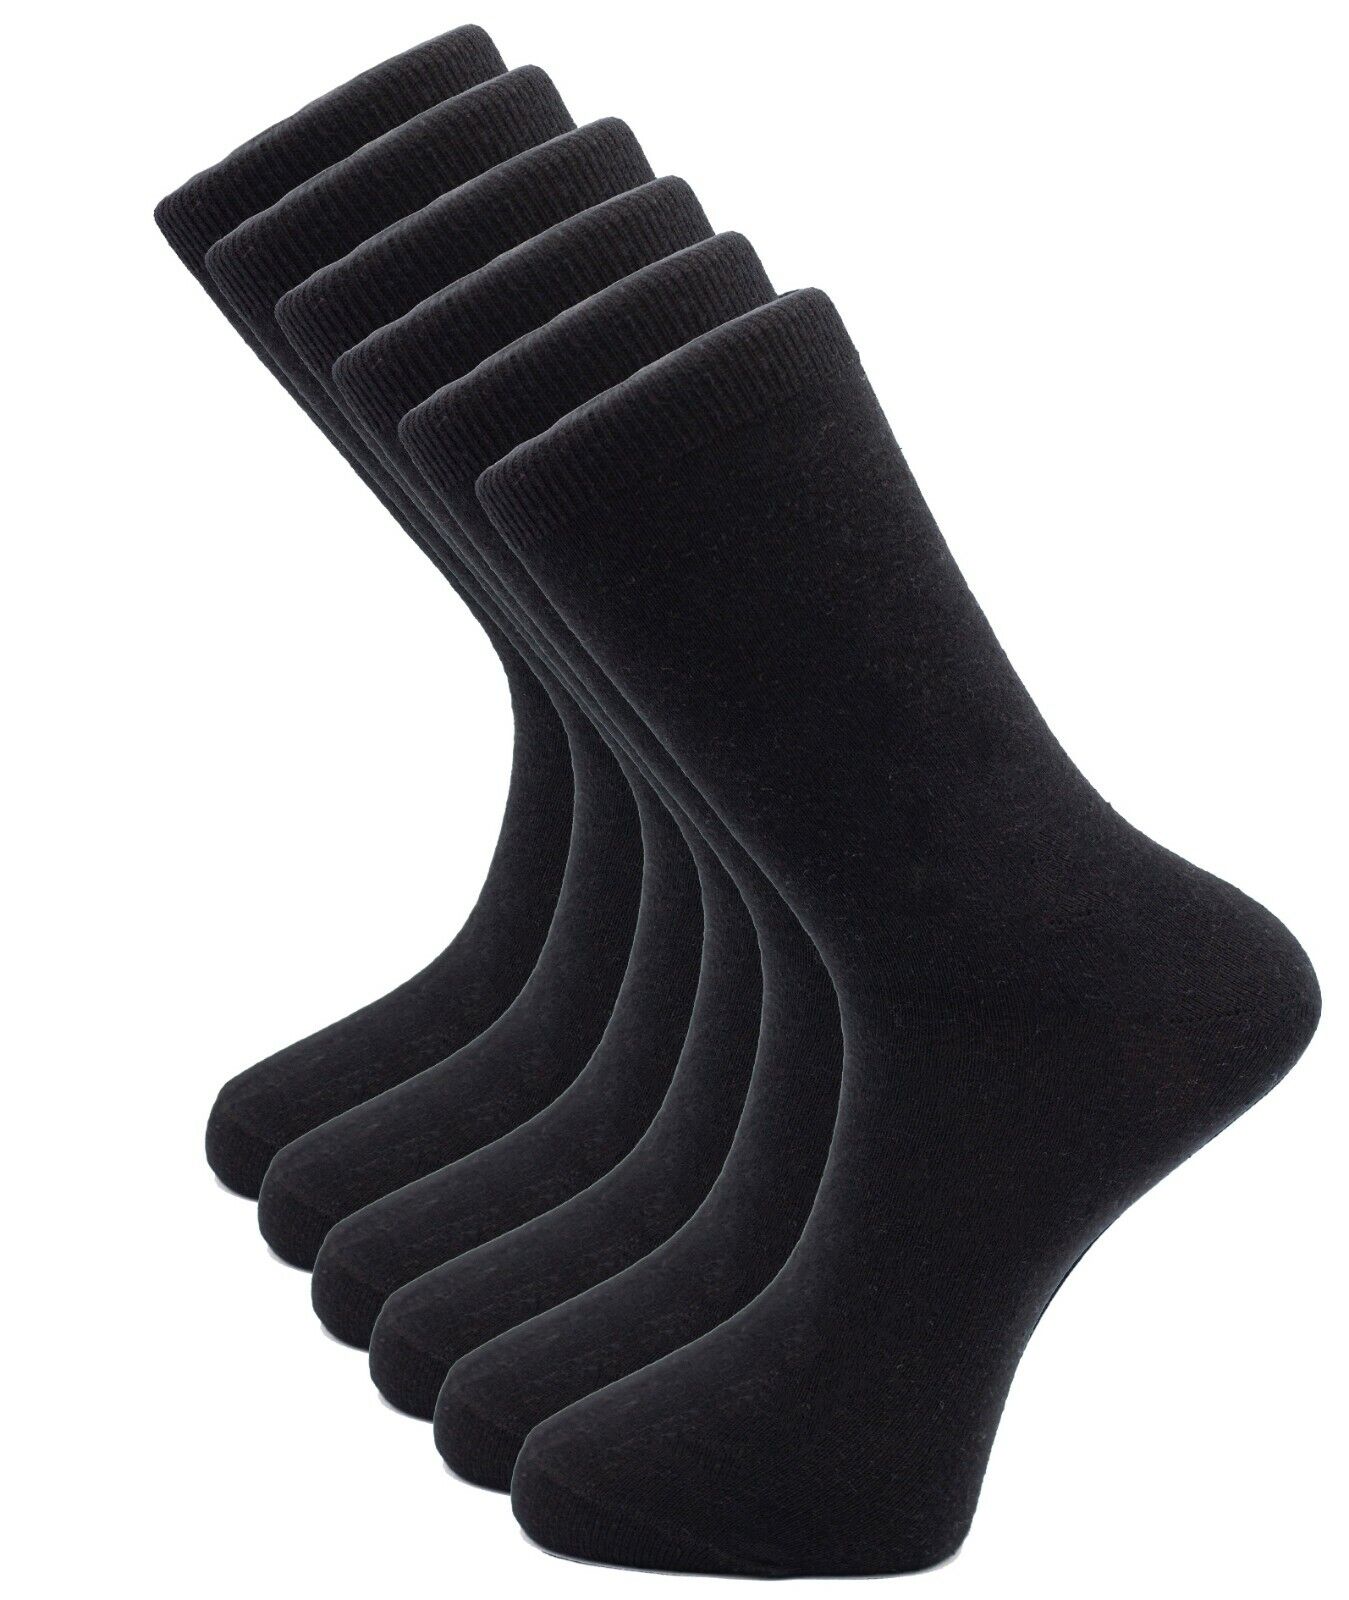 mens dress socks black cotton pairs business